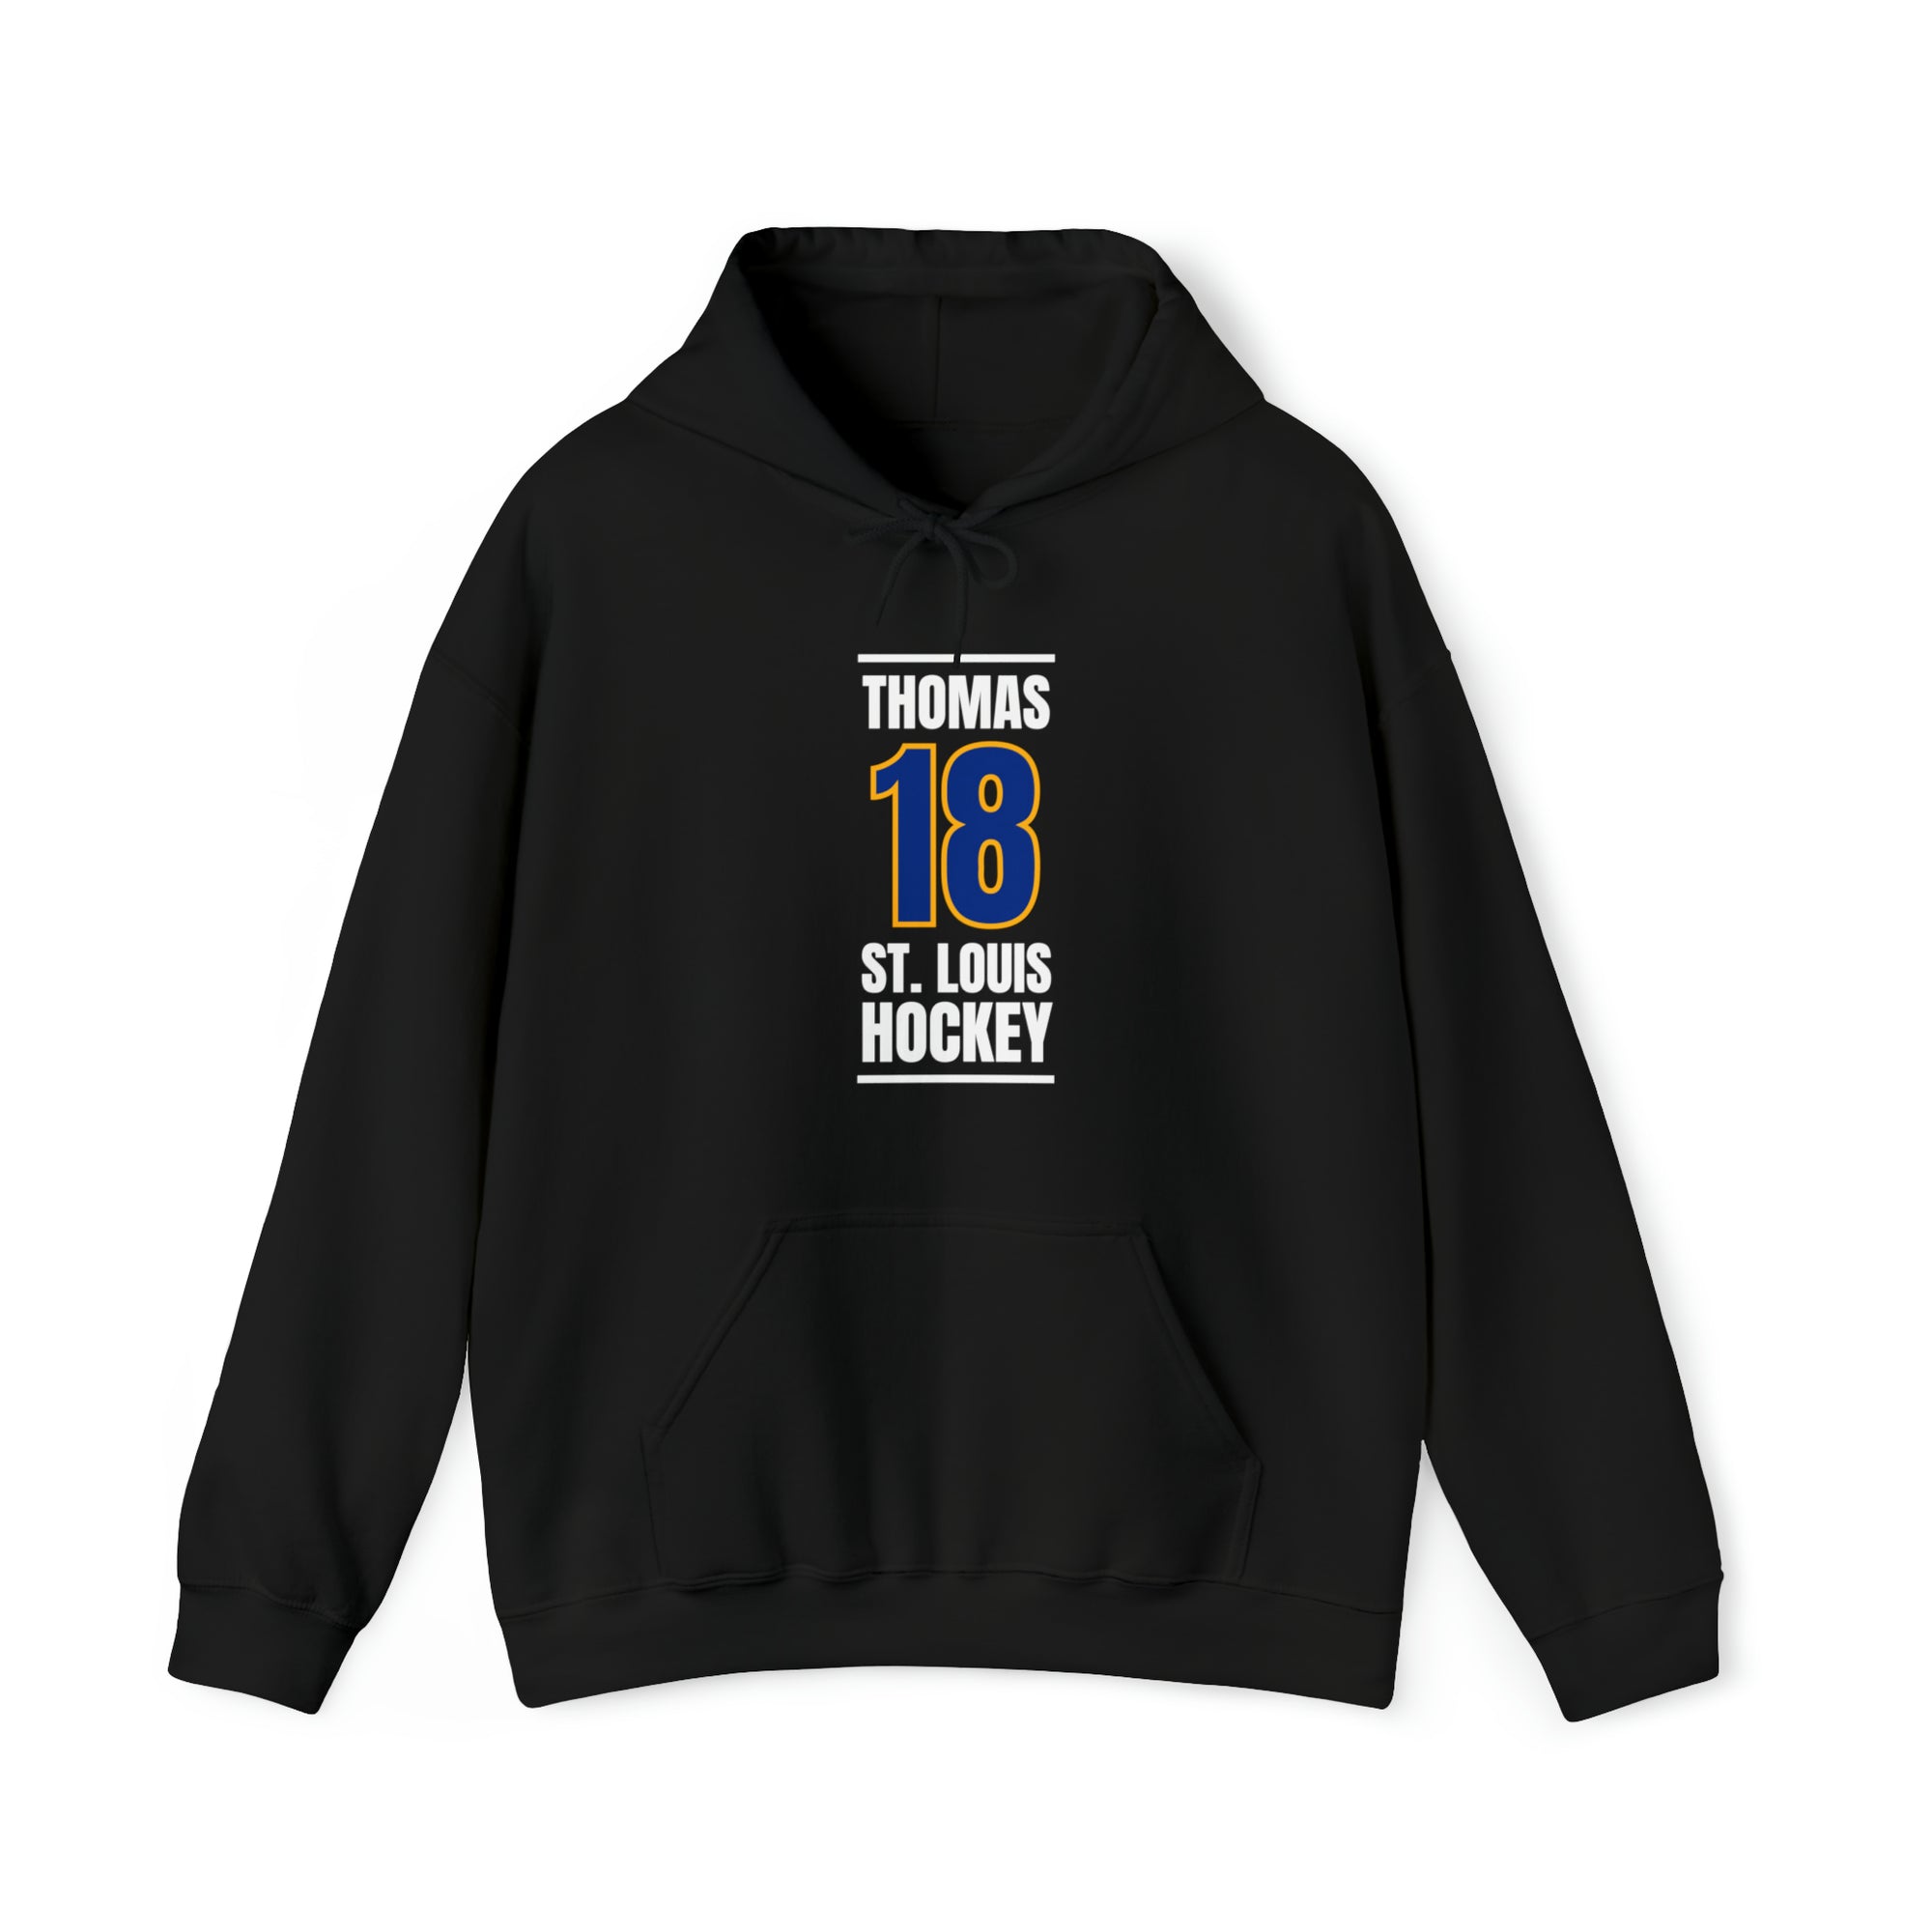 Thomas 18 St. Louis Hockey Blue Vertical Design Unisex Hooded Sweatshirt